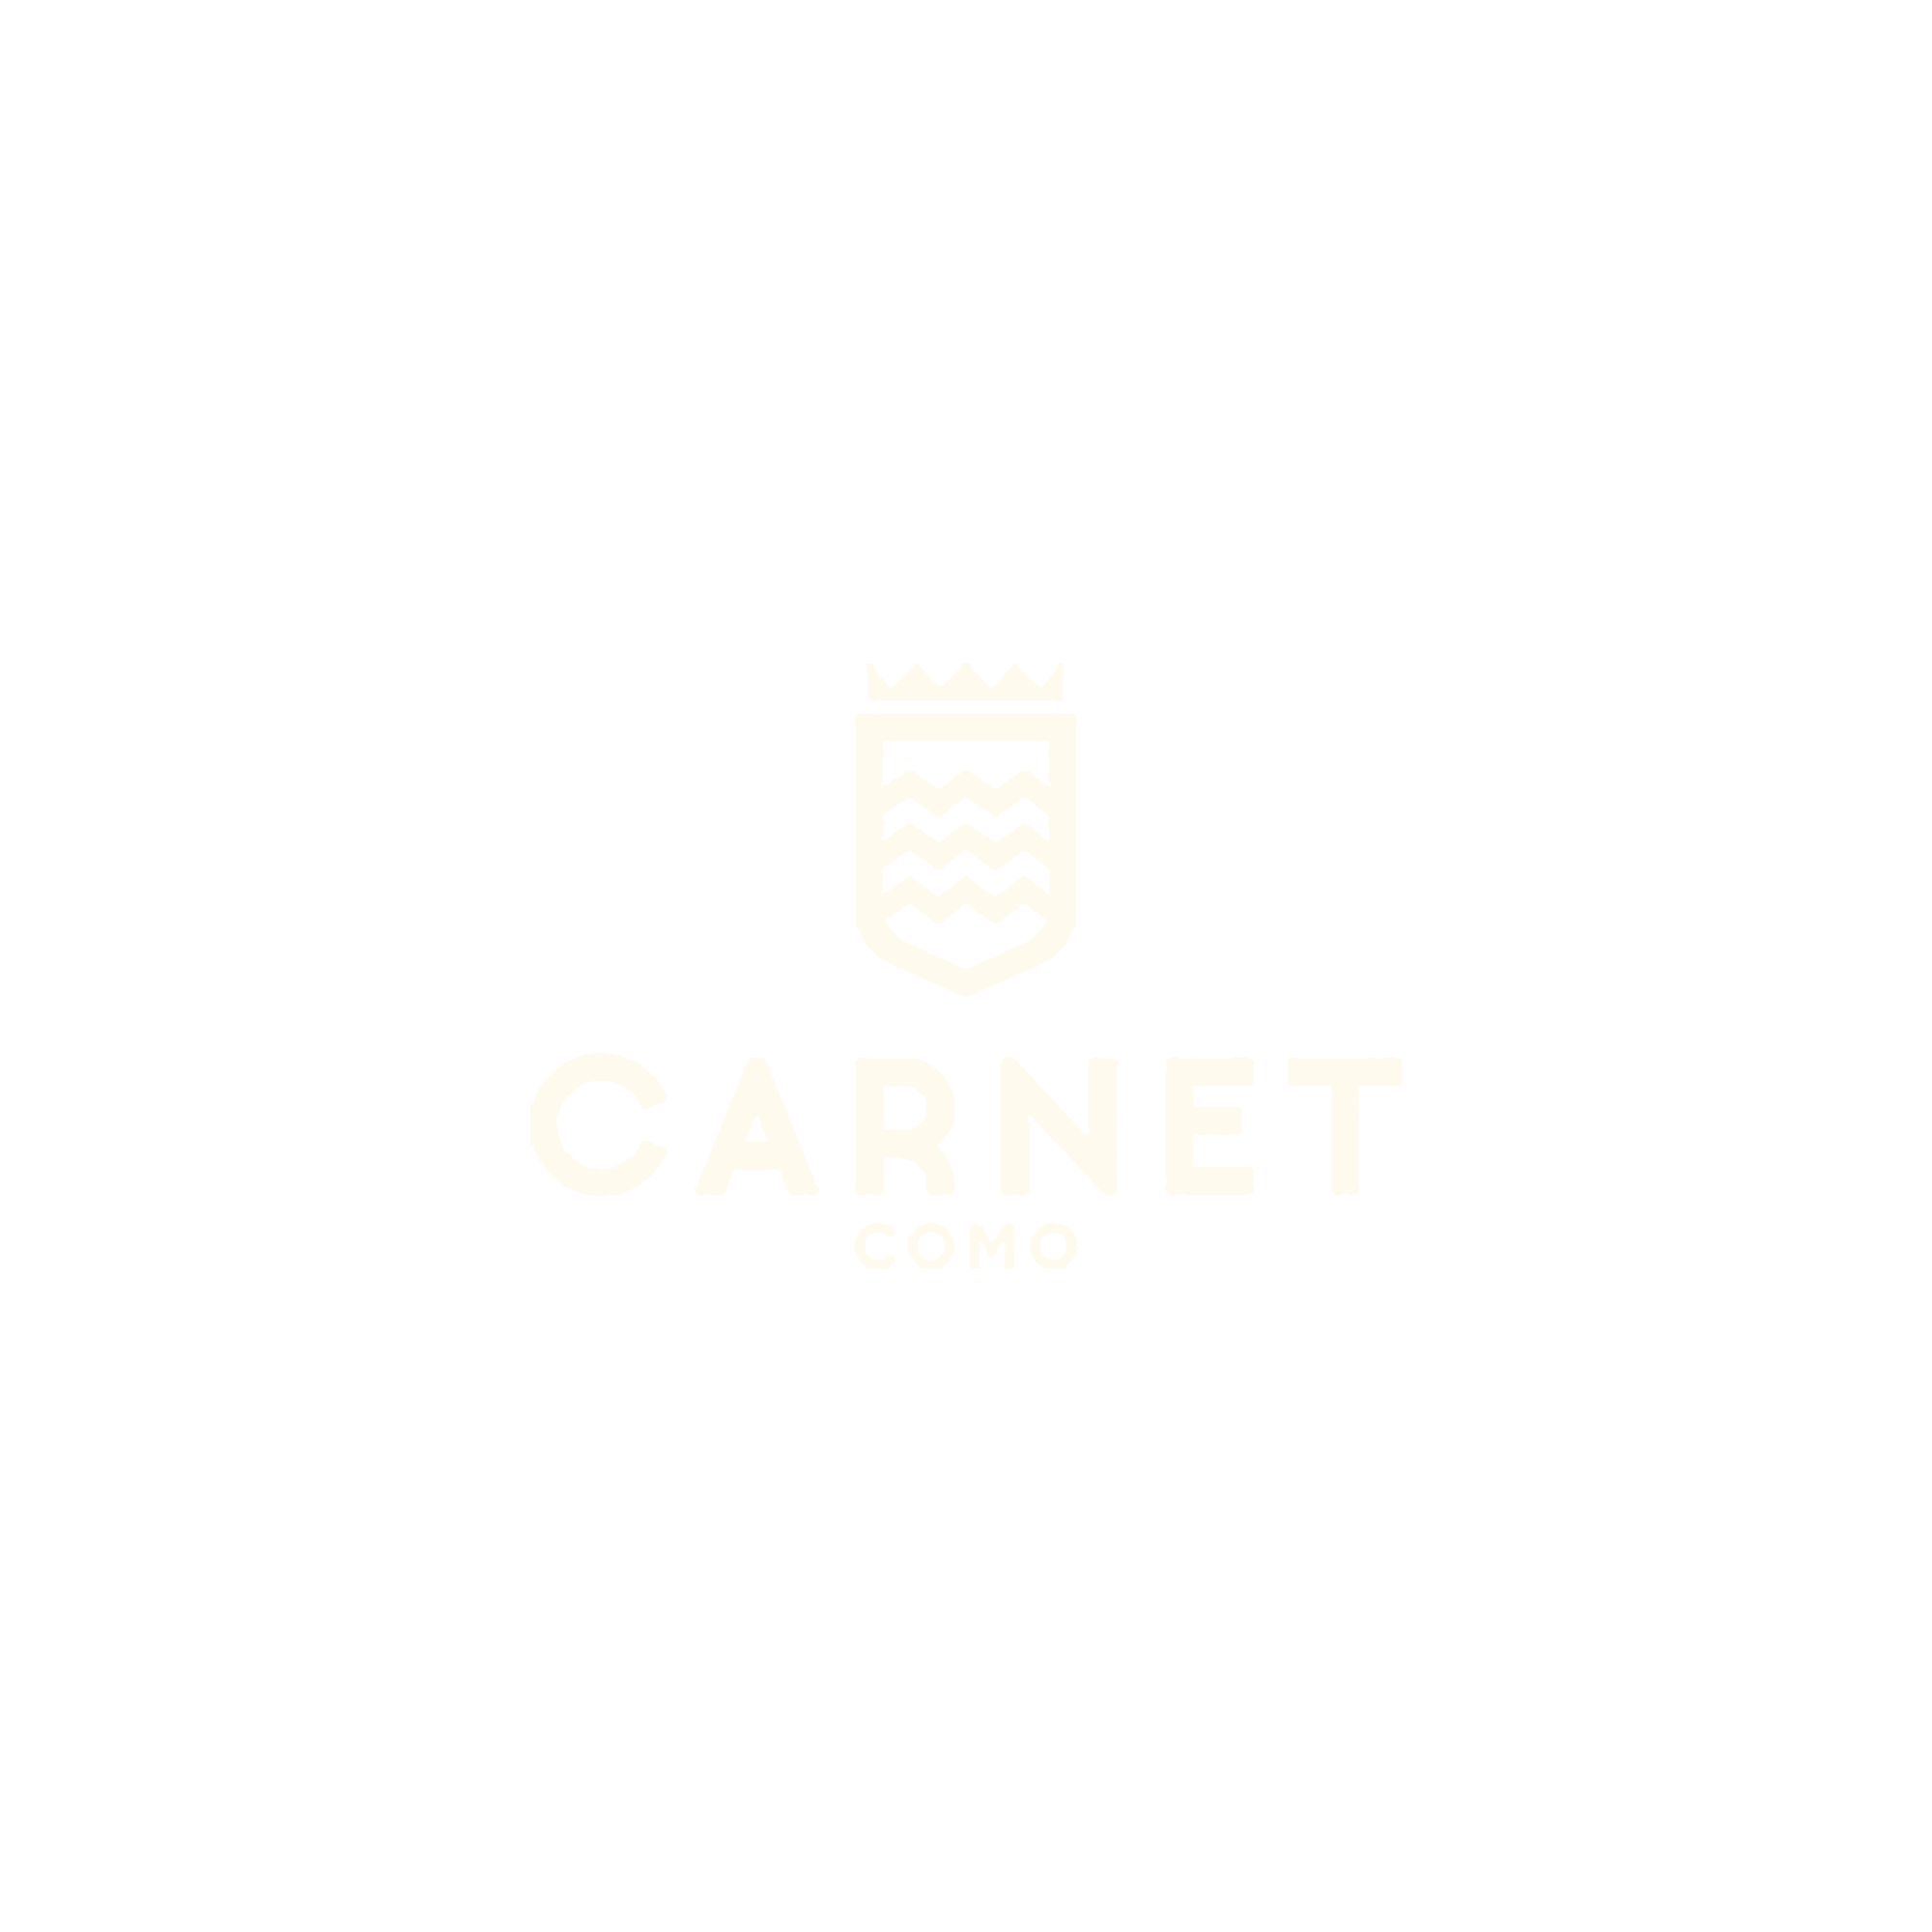 Carnet2